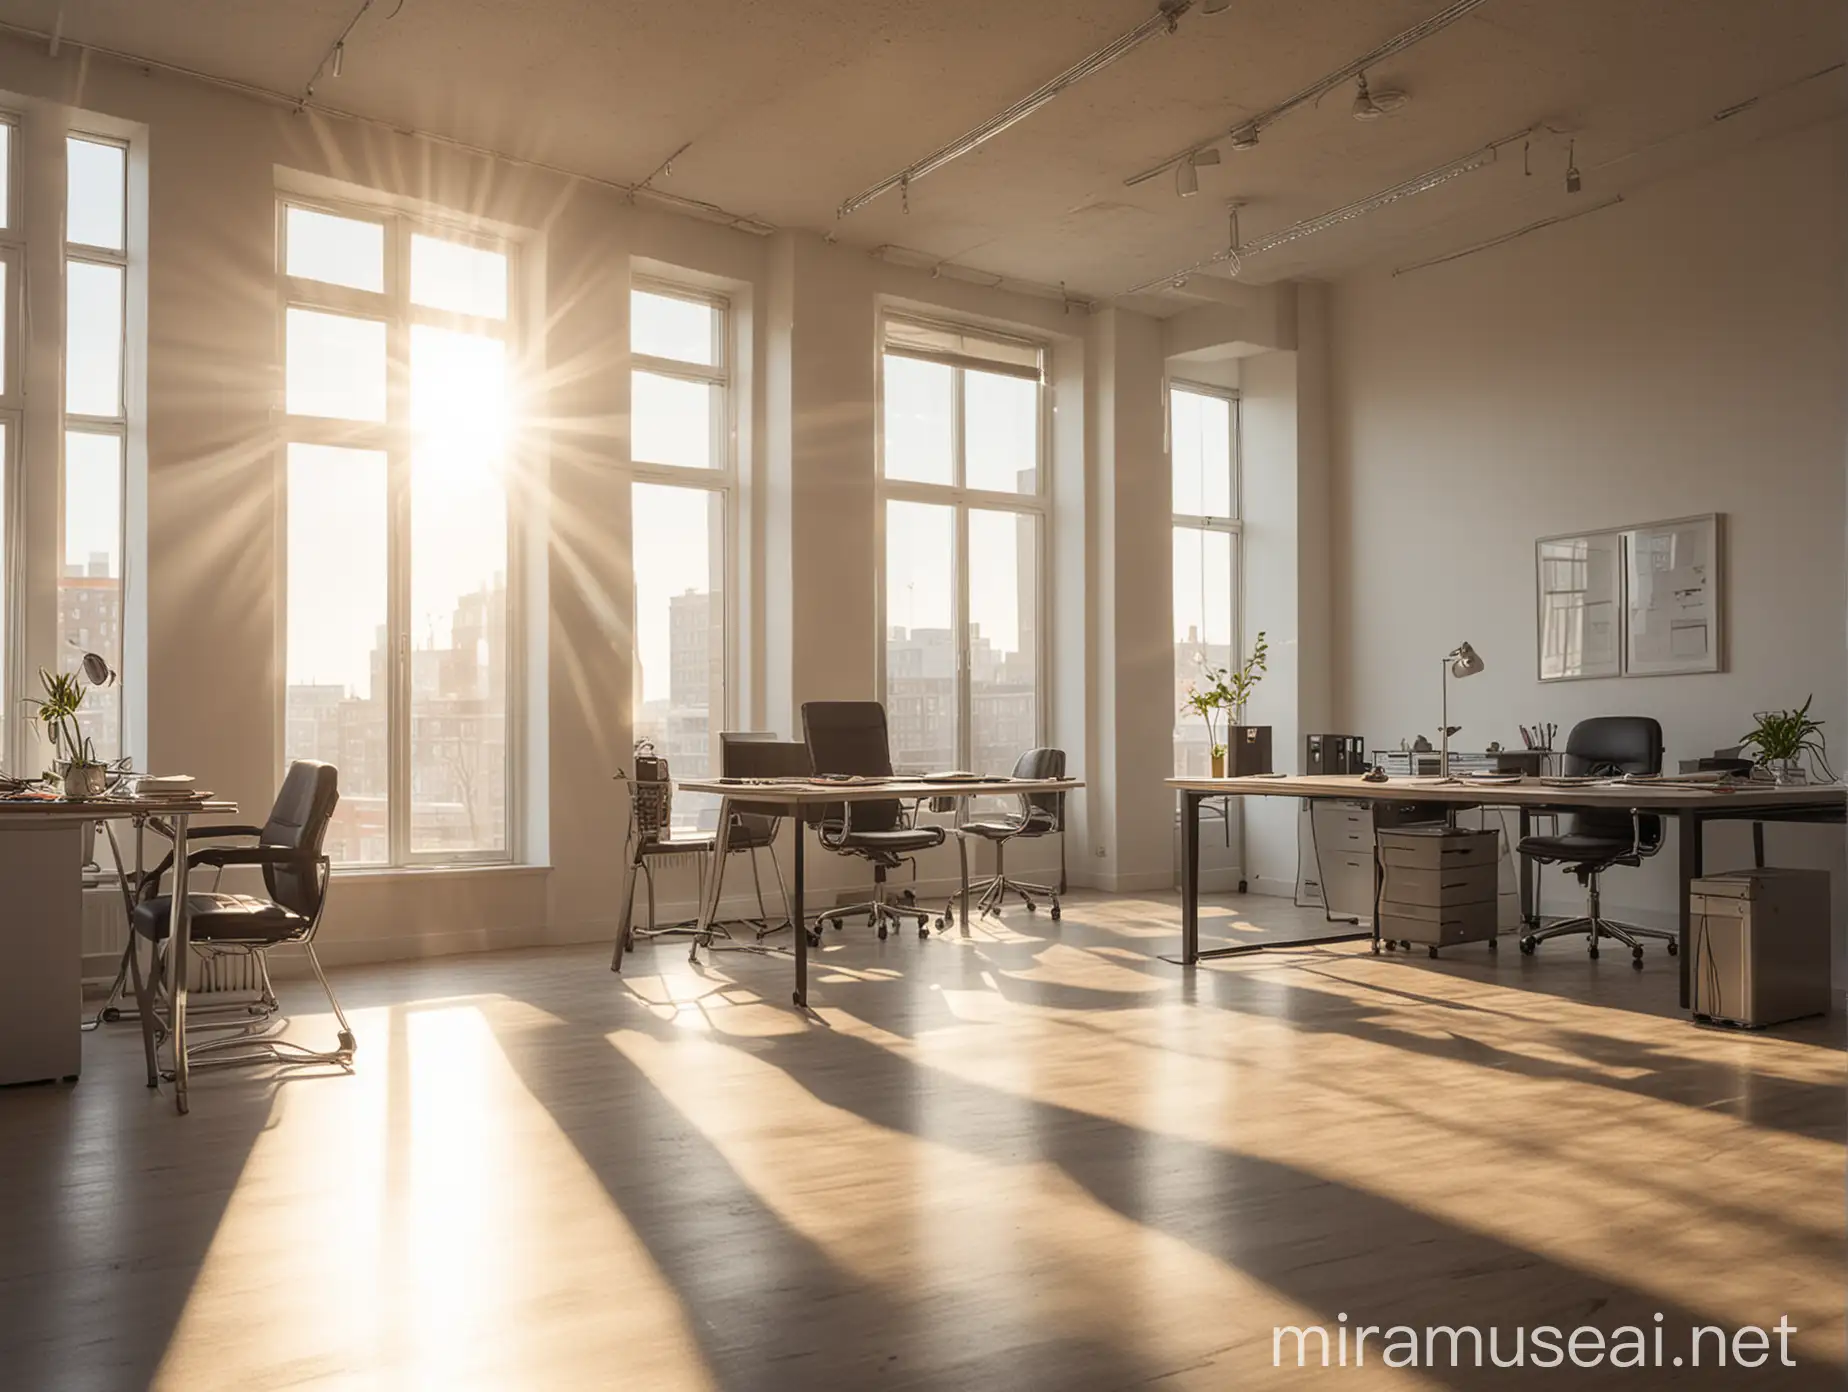 Bright Sunlit Office Room with Modern Interior Design